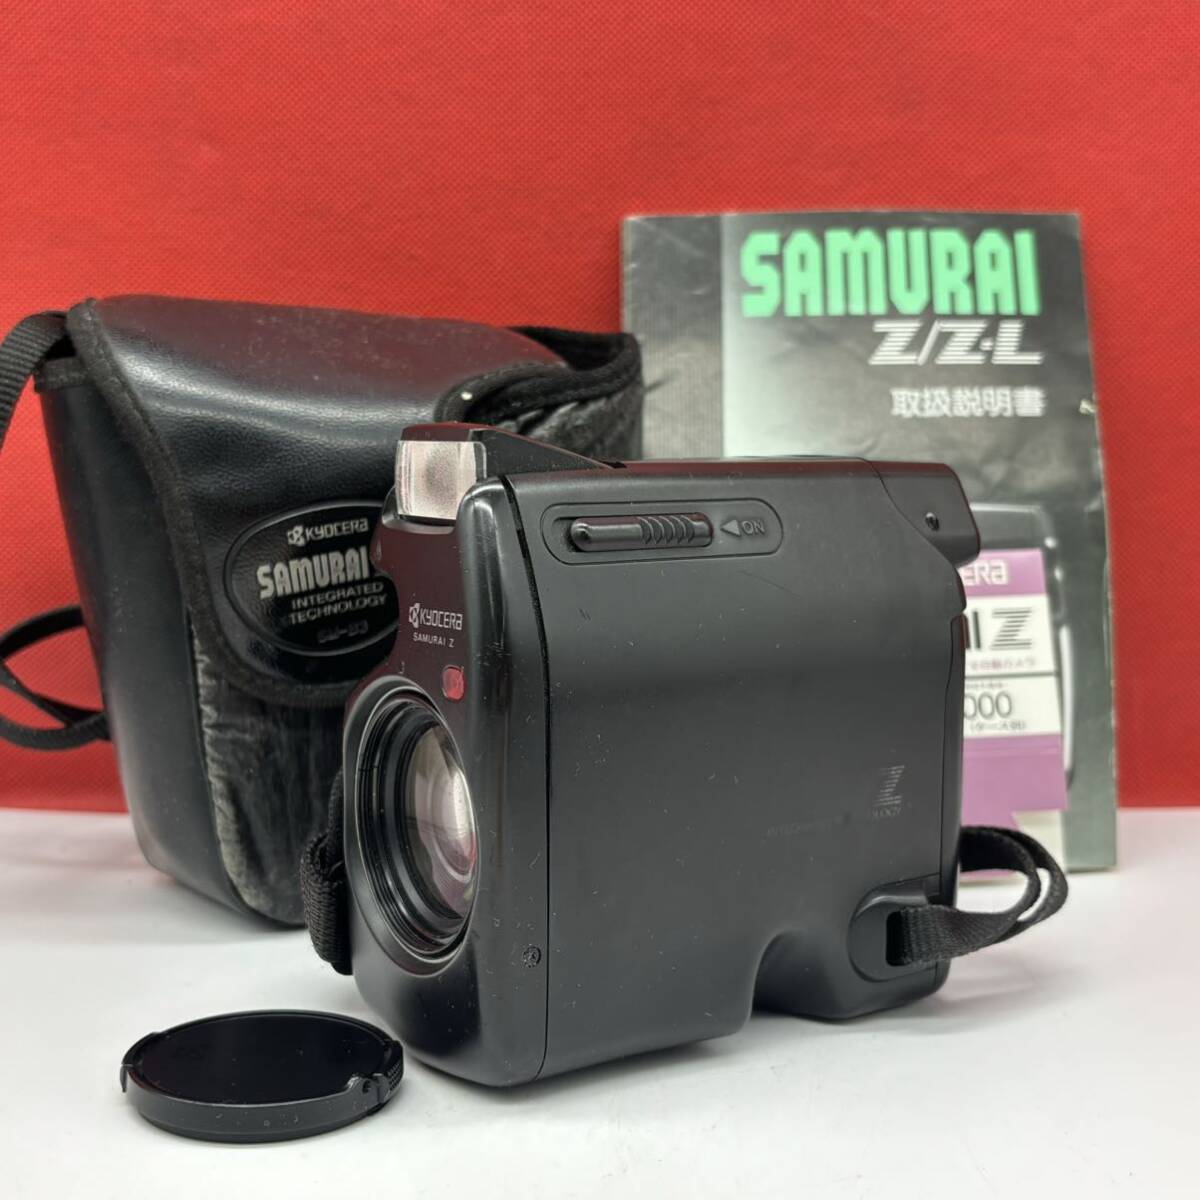 ◆ KYOCERA SAMURAI Z フィルムカメラ コンパクトカメラ 25mm-75mm F4.0-5.8 シャッター、フラッシュOK 京セラの画像1